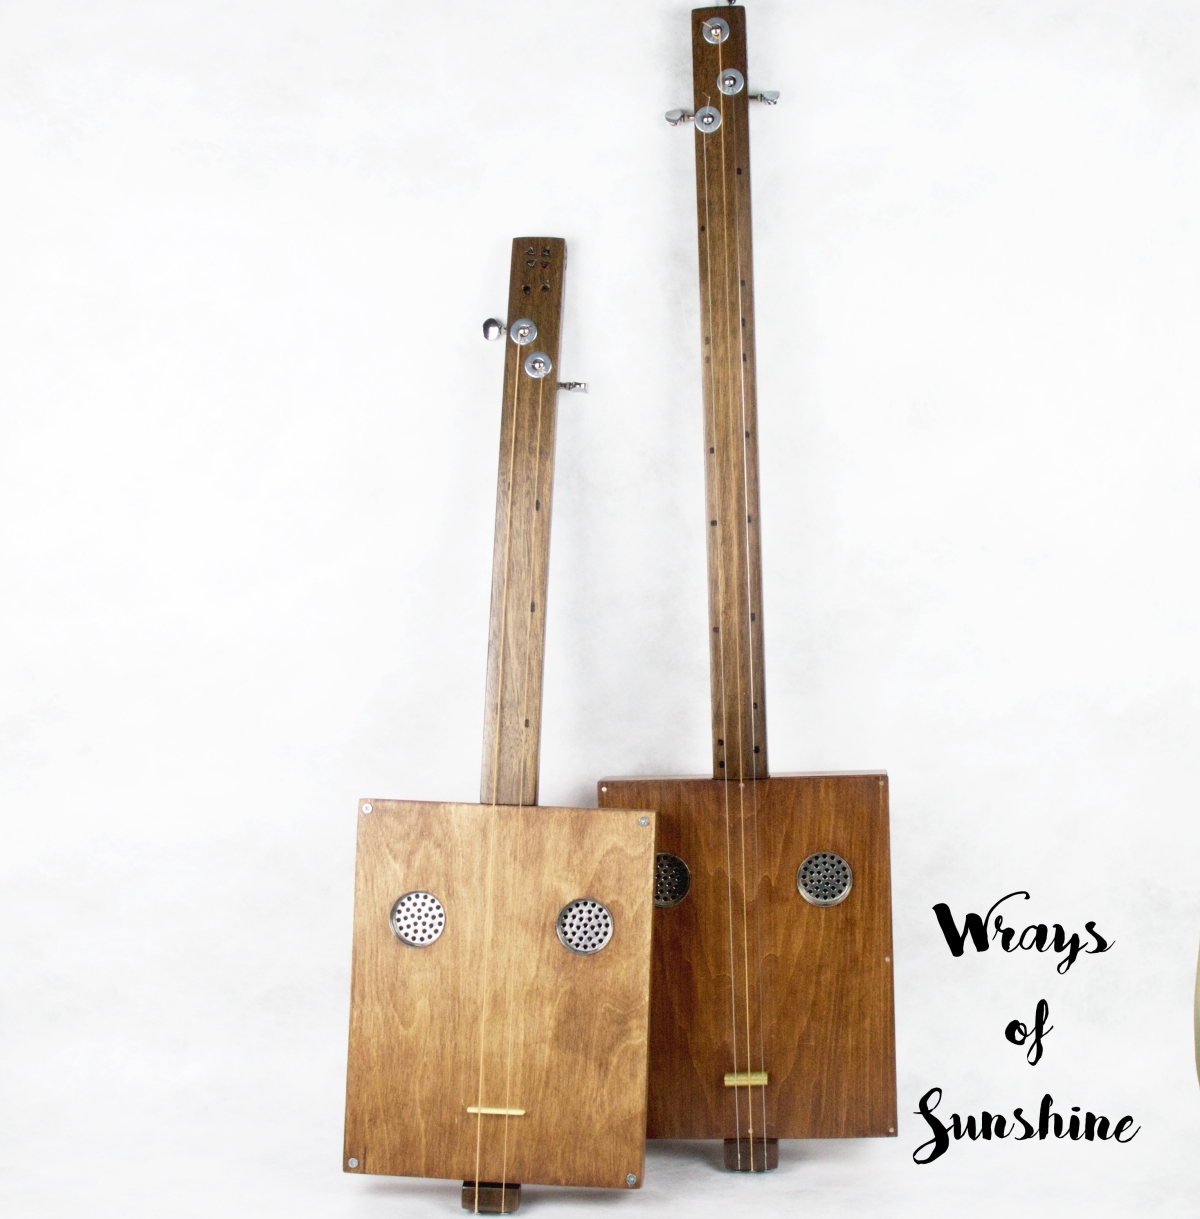 Make: Honeybee’s Handmade Instruments